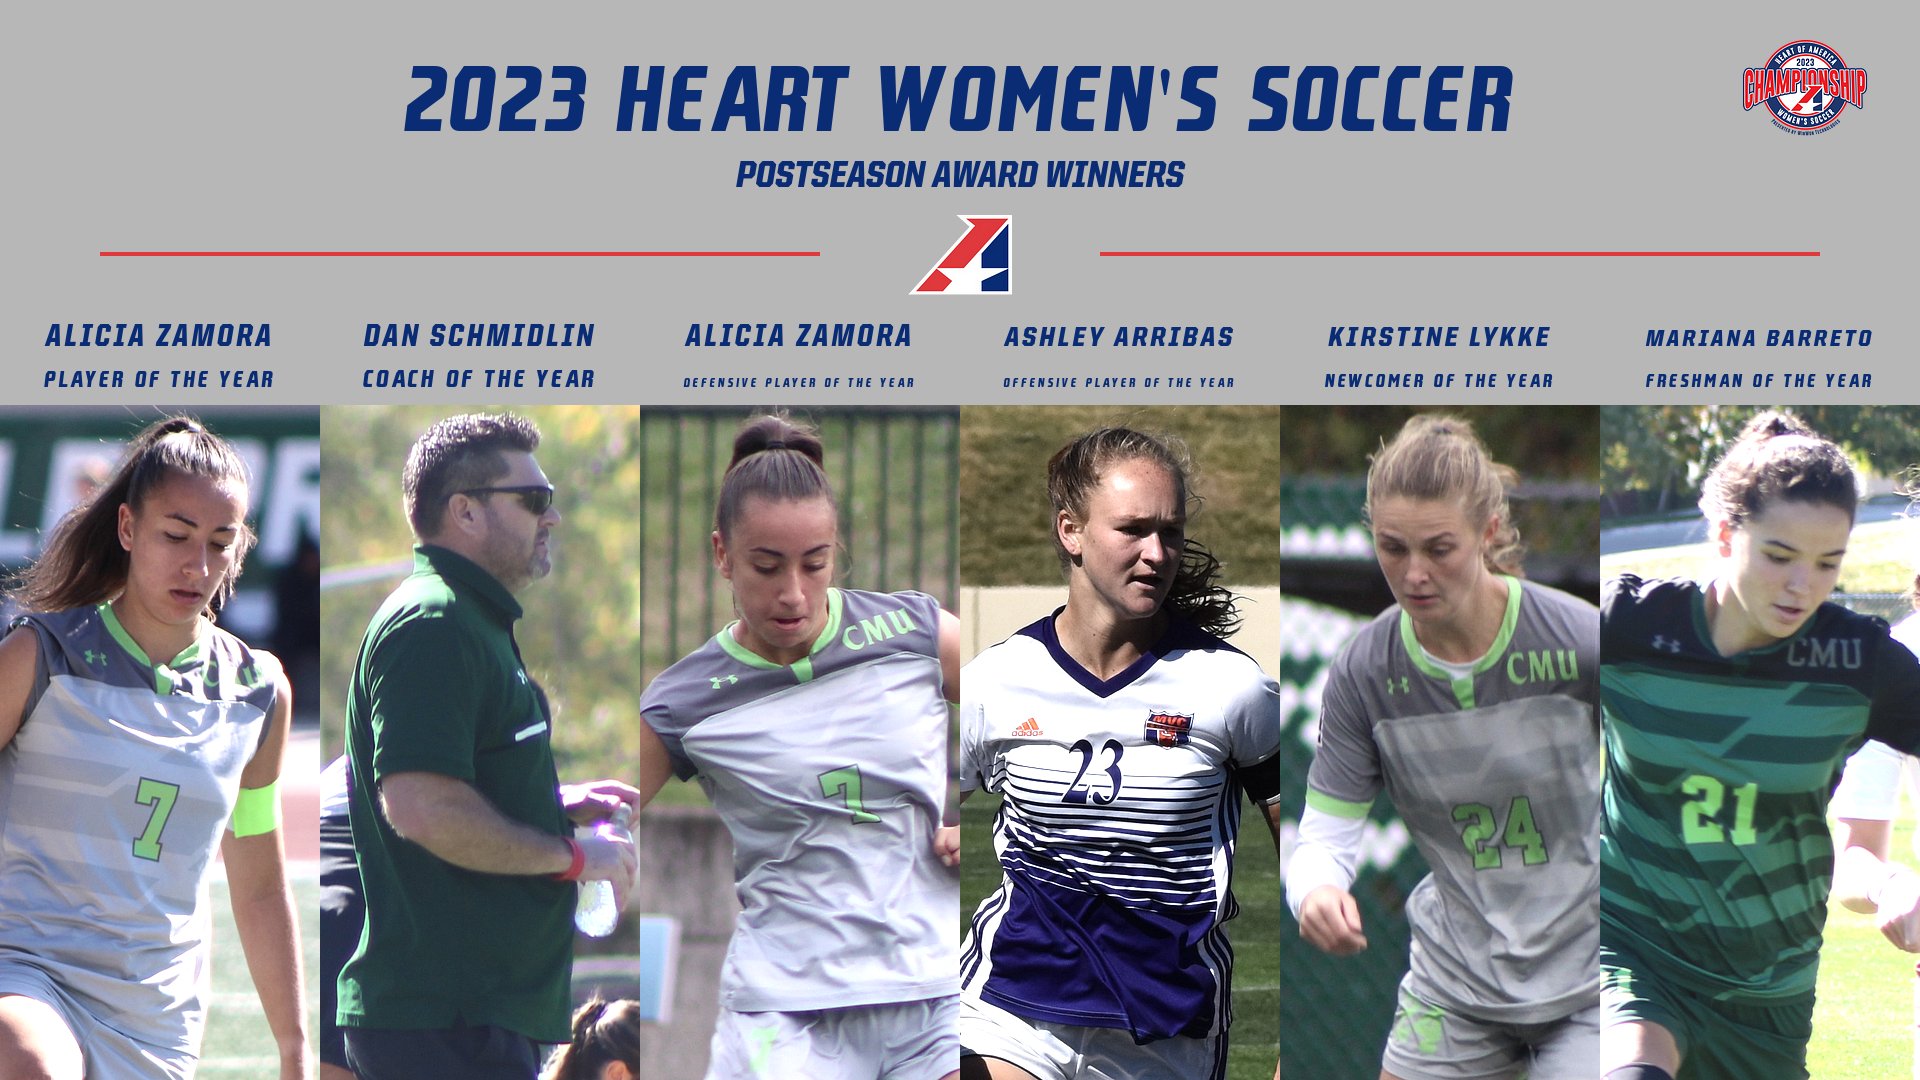 2023 Heart Women’s Soccer All-Conference Teams & Postseason Awards Announced